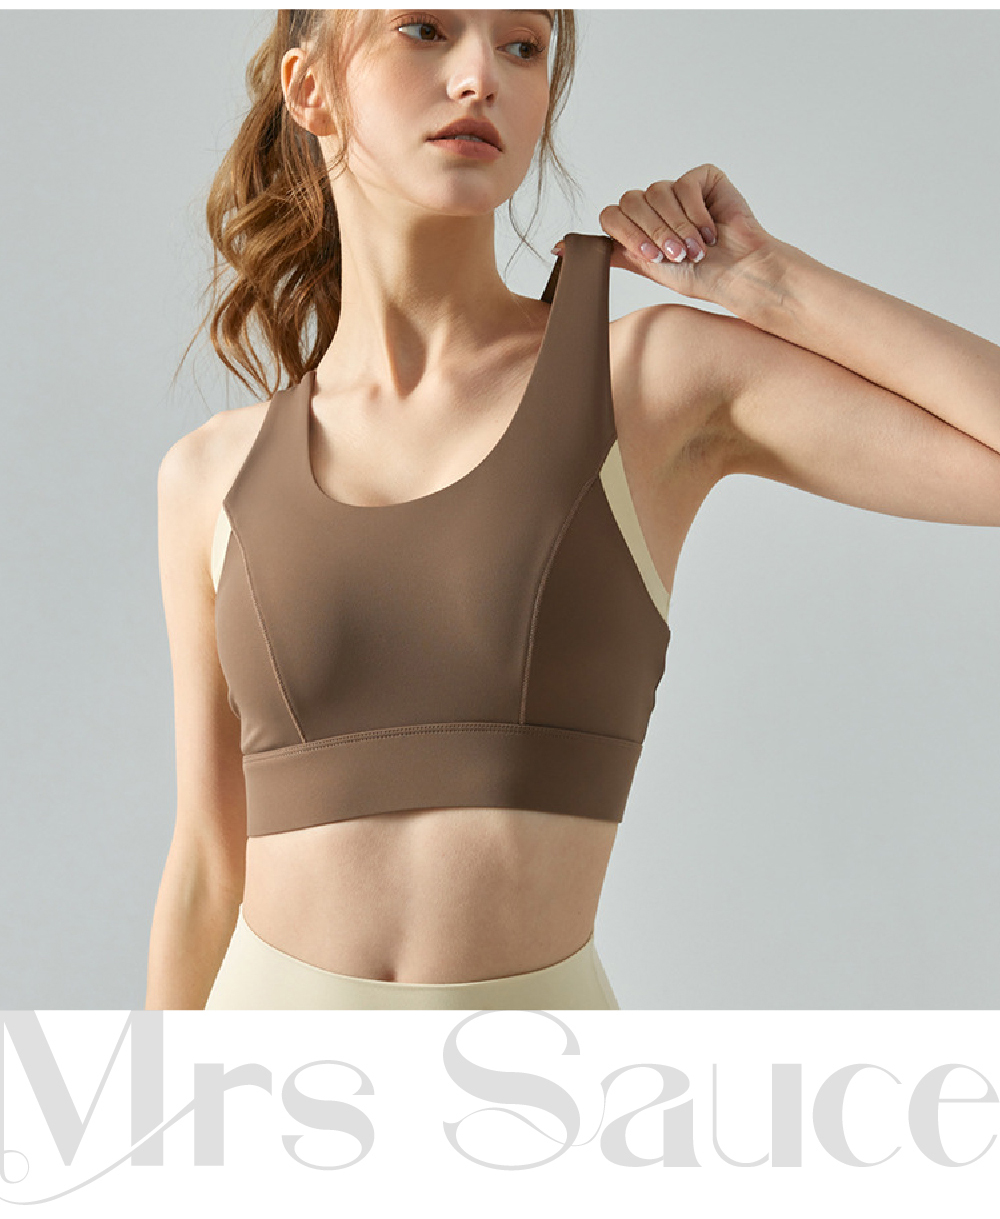 Yoga vest chest pad arc hem beauty back suspender sports underwear